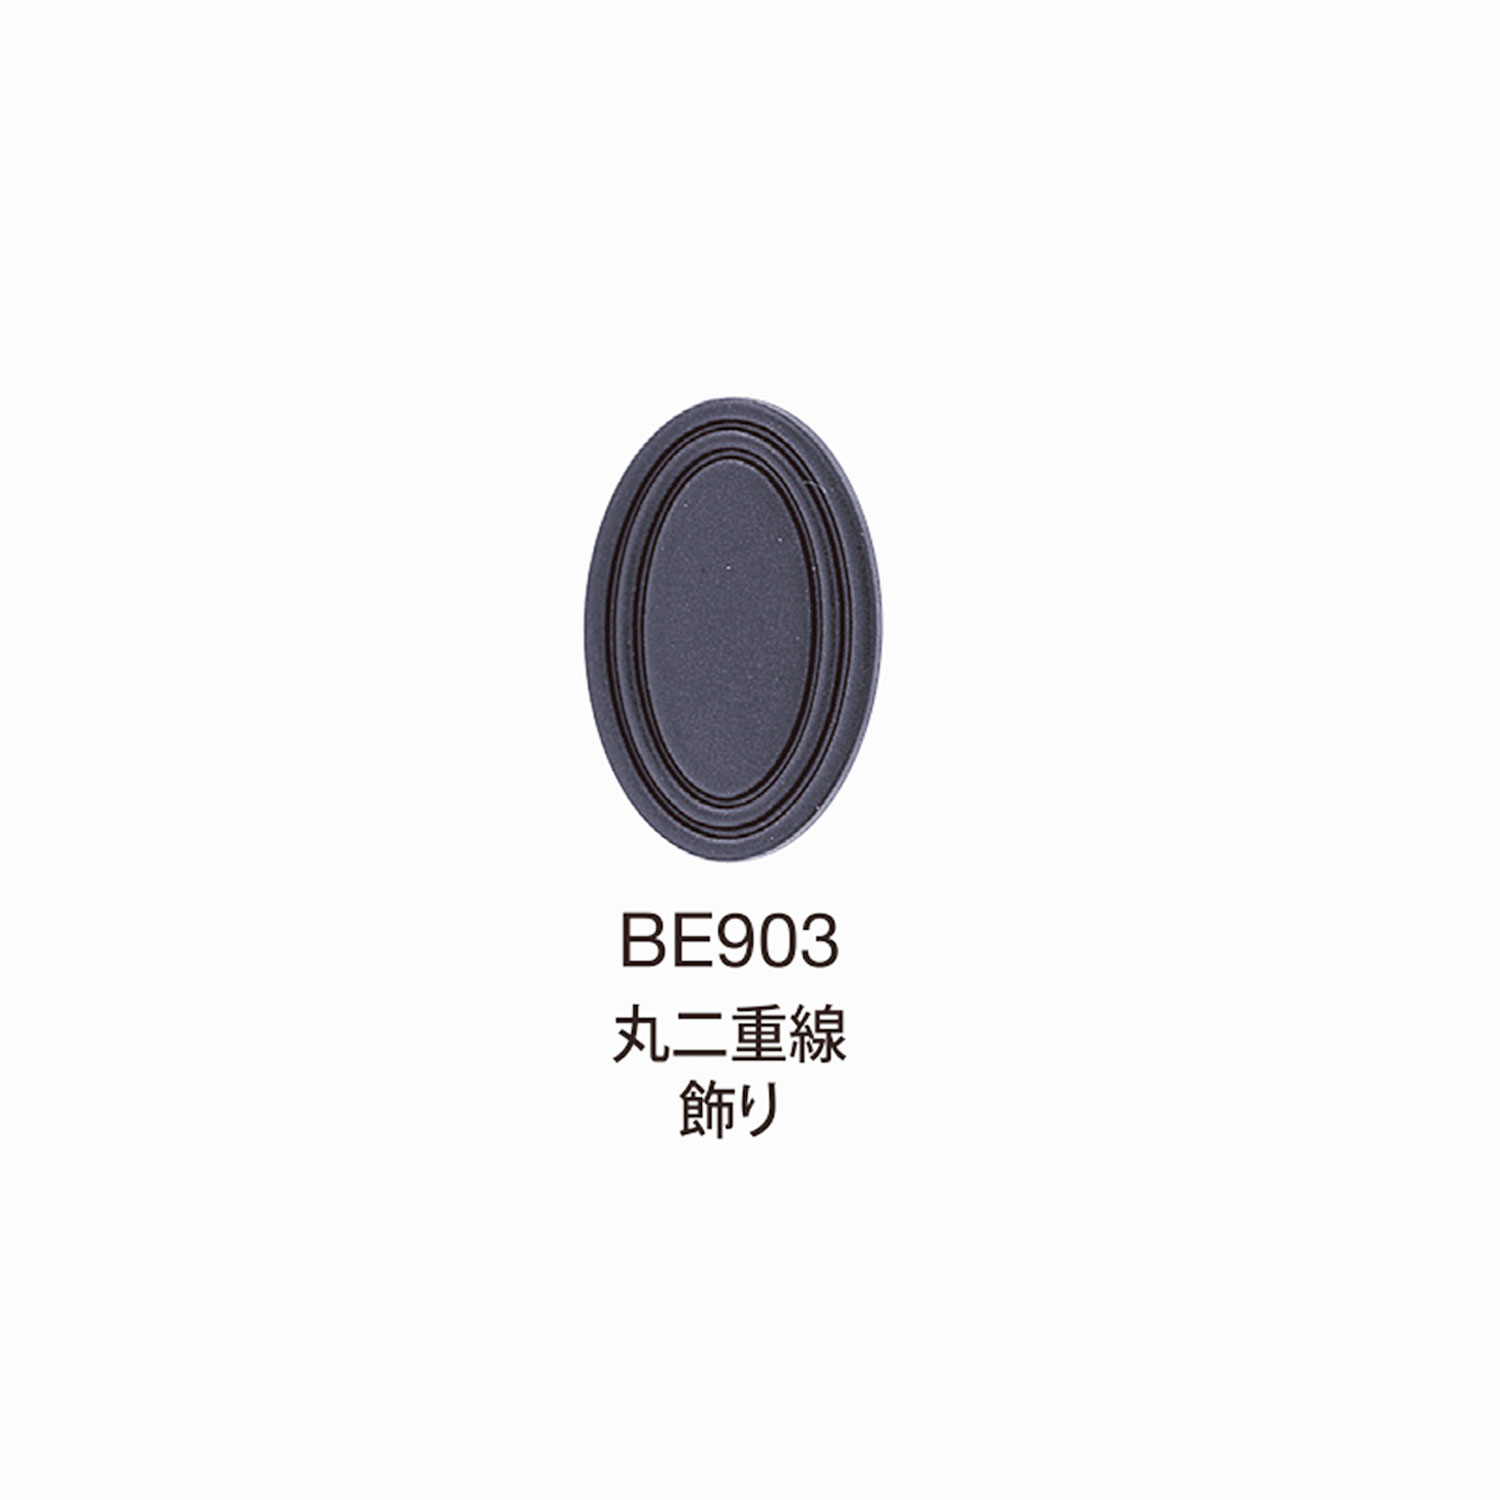 BE903 BEREX α Top Hardware 圓形雙線裝飾[扣和環] Morito（MORITO）